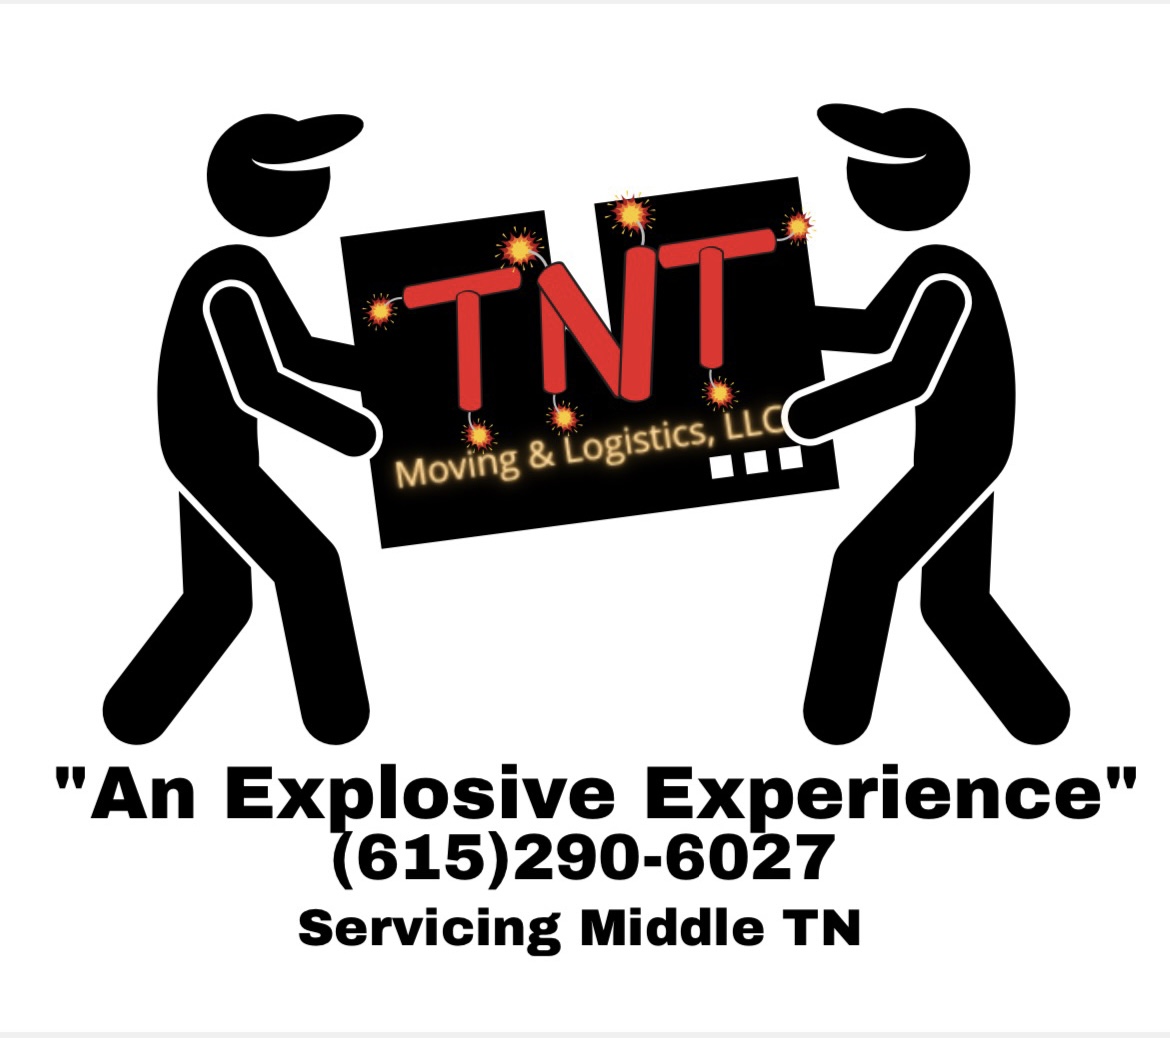 TNT Moving & Logistics, LLC